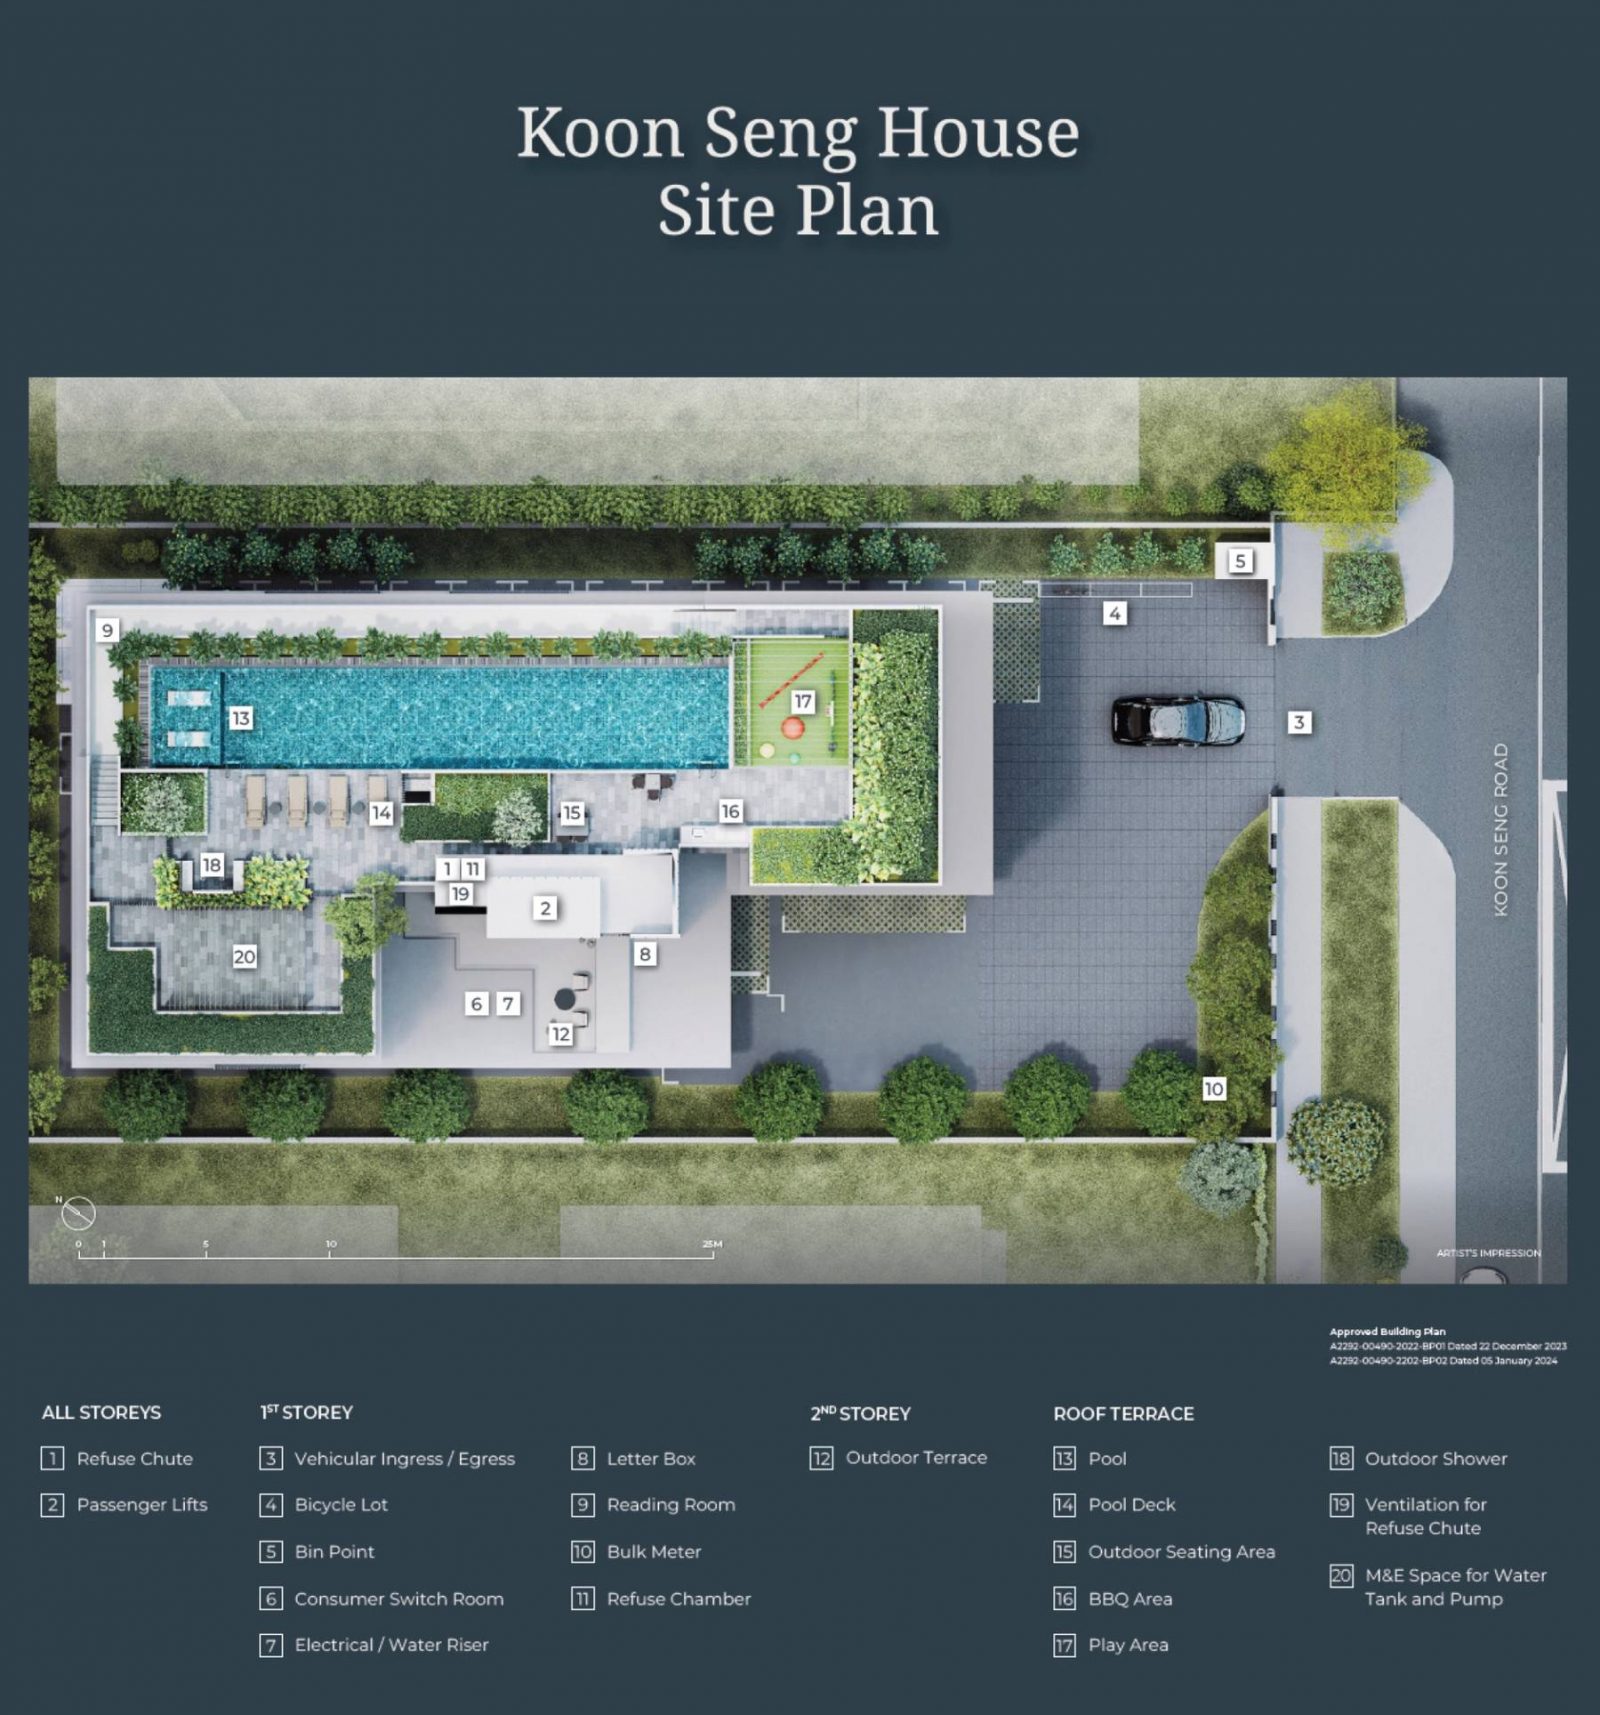 Koon Seng House Site Plan